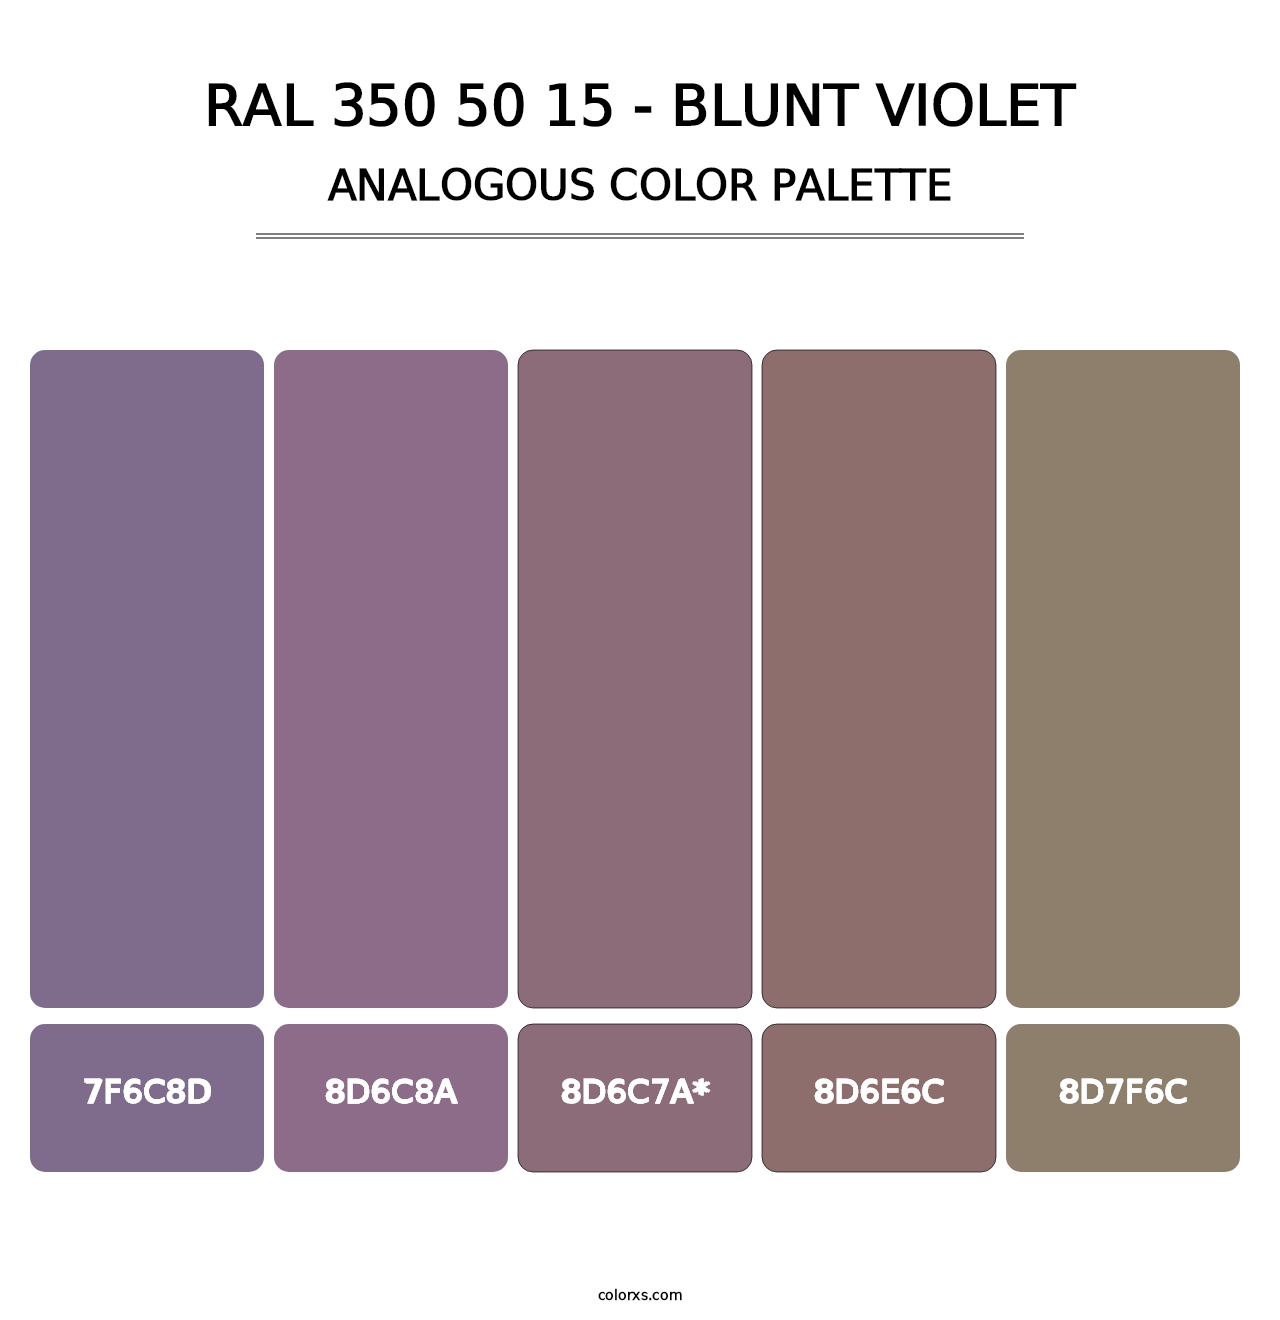 RAL 350 50 15 - Blunt Violet - Analogous Color Palette